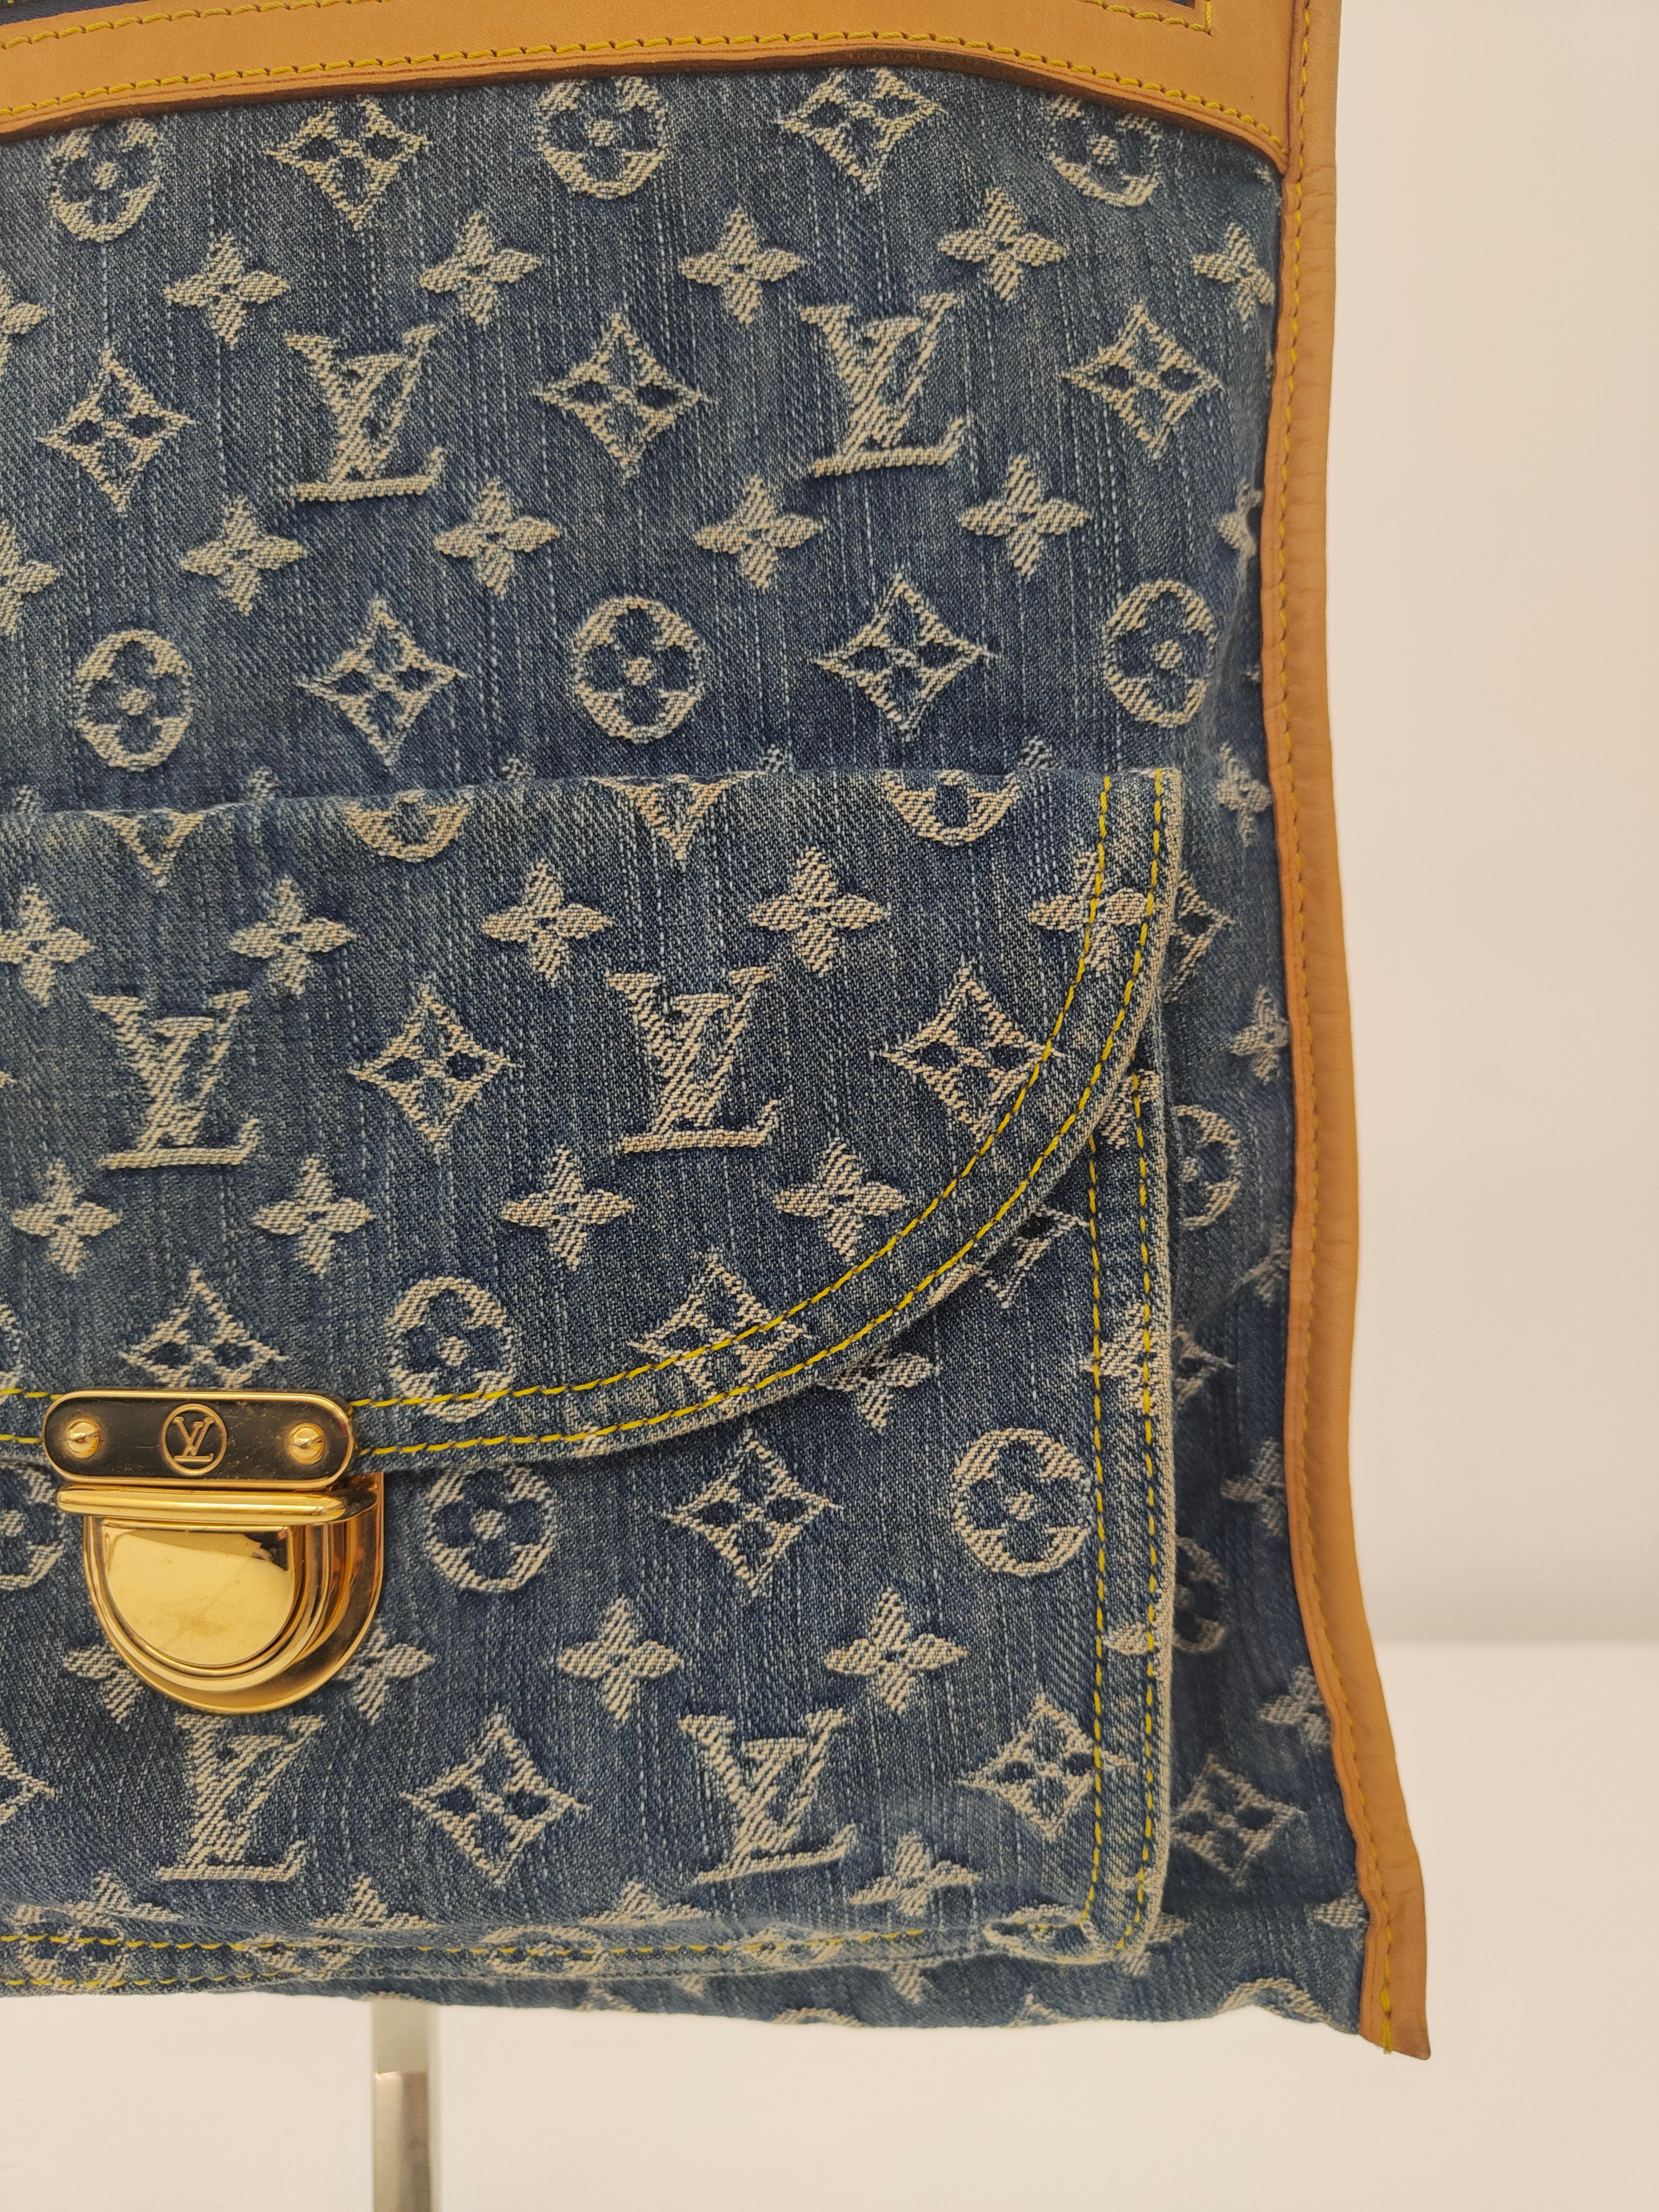 Louis Vuitton denim sac plat
33*37cm